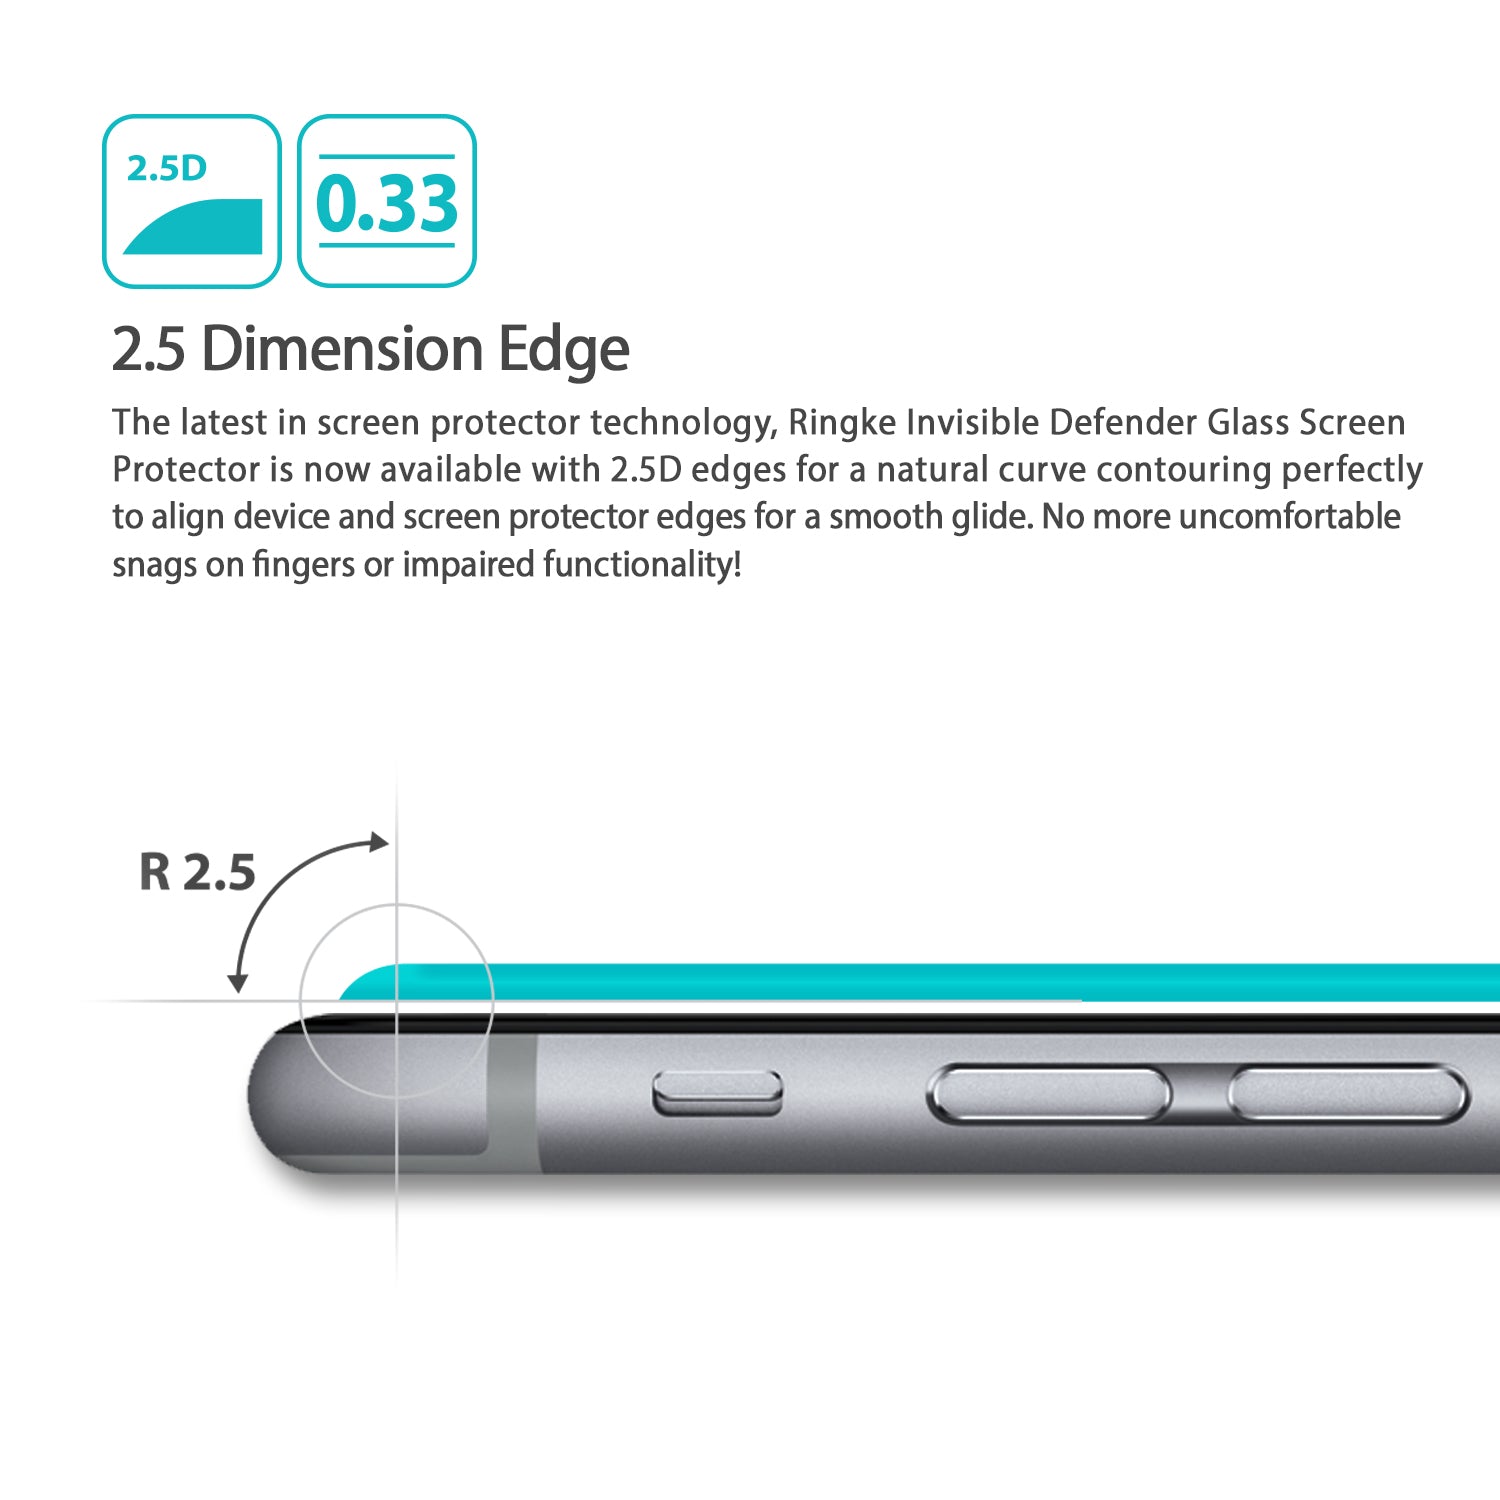 Google Pixel XL Screen Protector | Invisible Defender Glass - 2.5 Dimension Edge